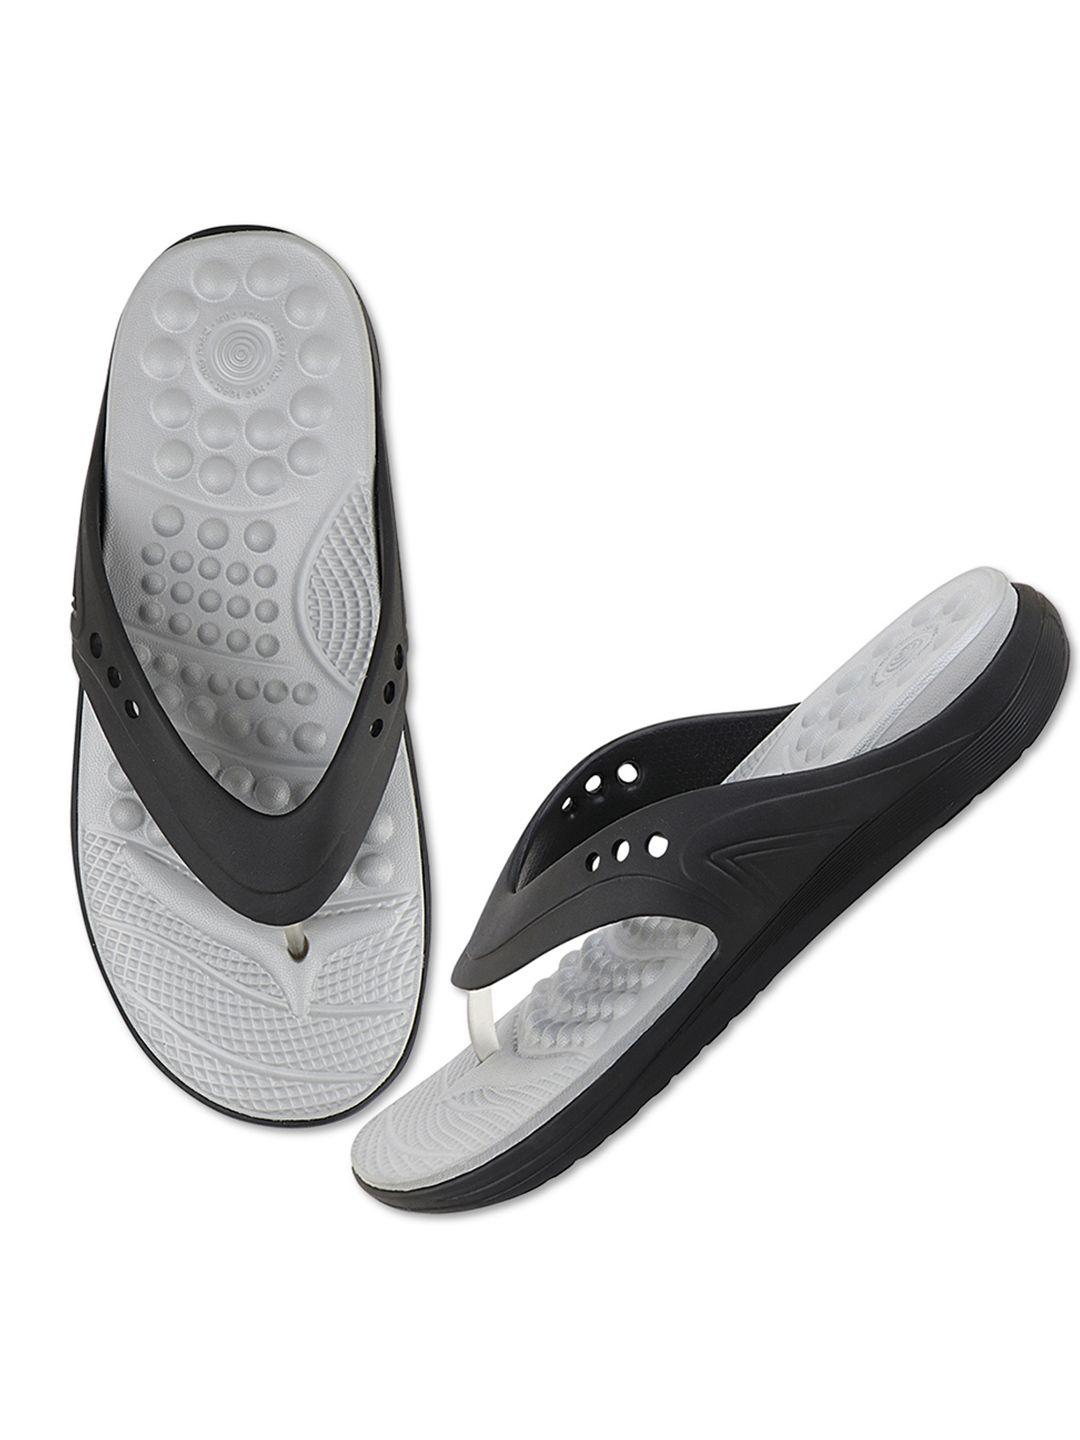 neoz men black & grey rubber thong flip-flops